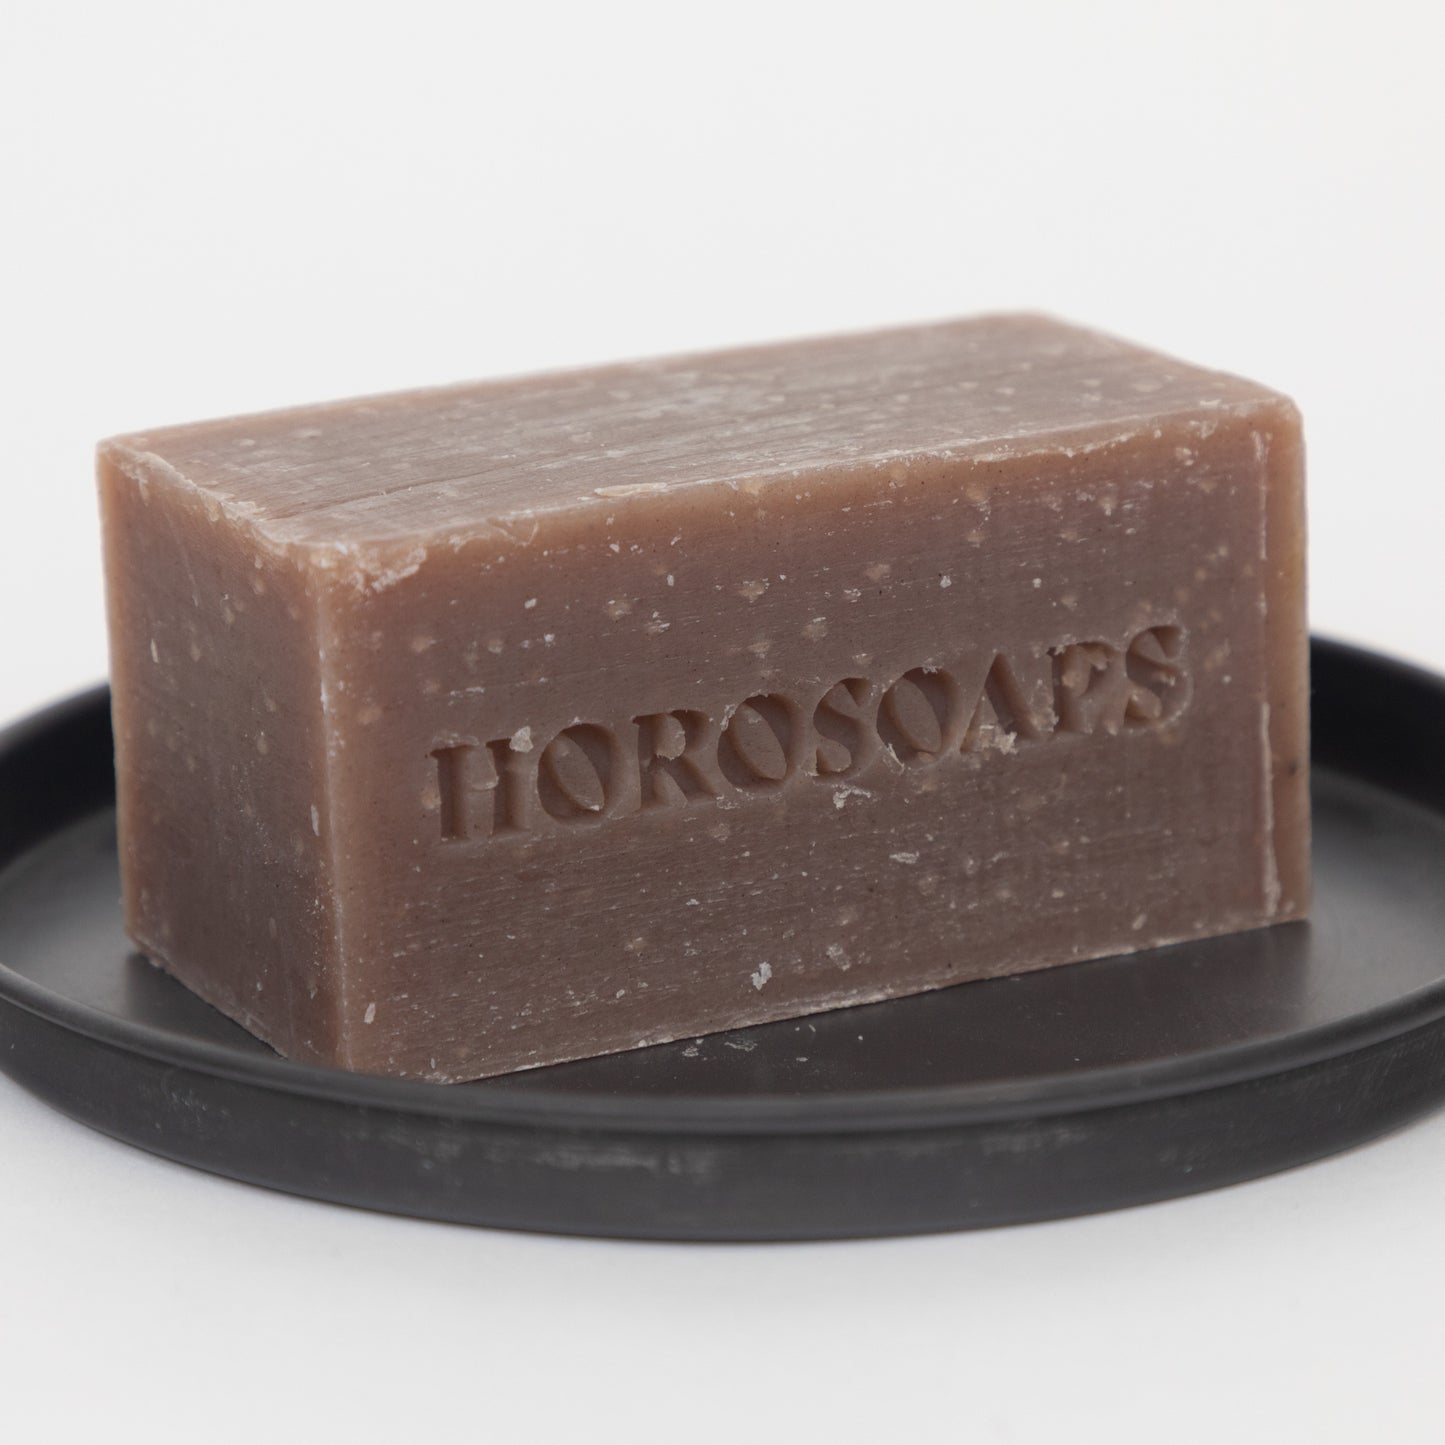 HOROSOAPS Pisces Soap Bar